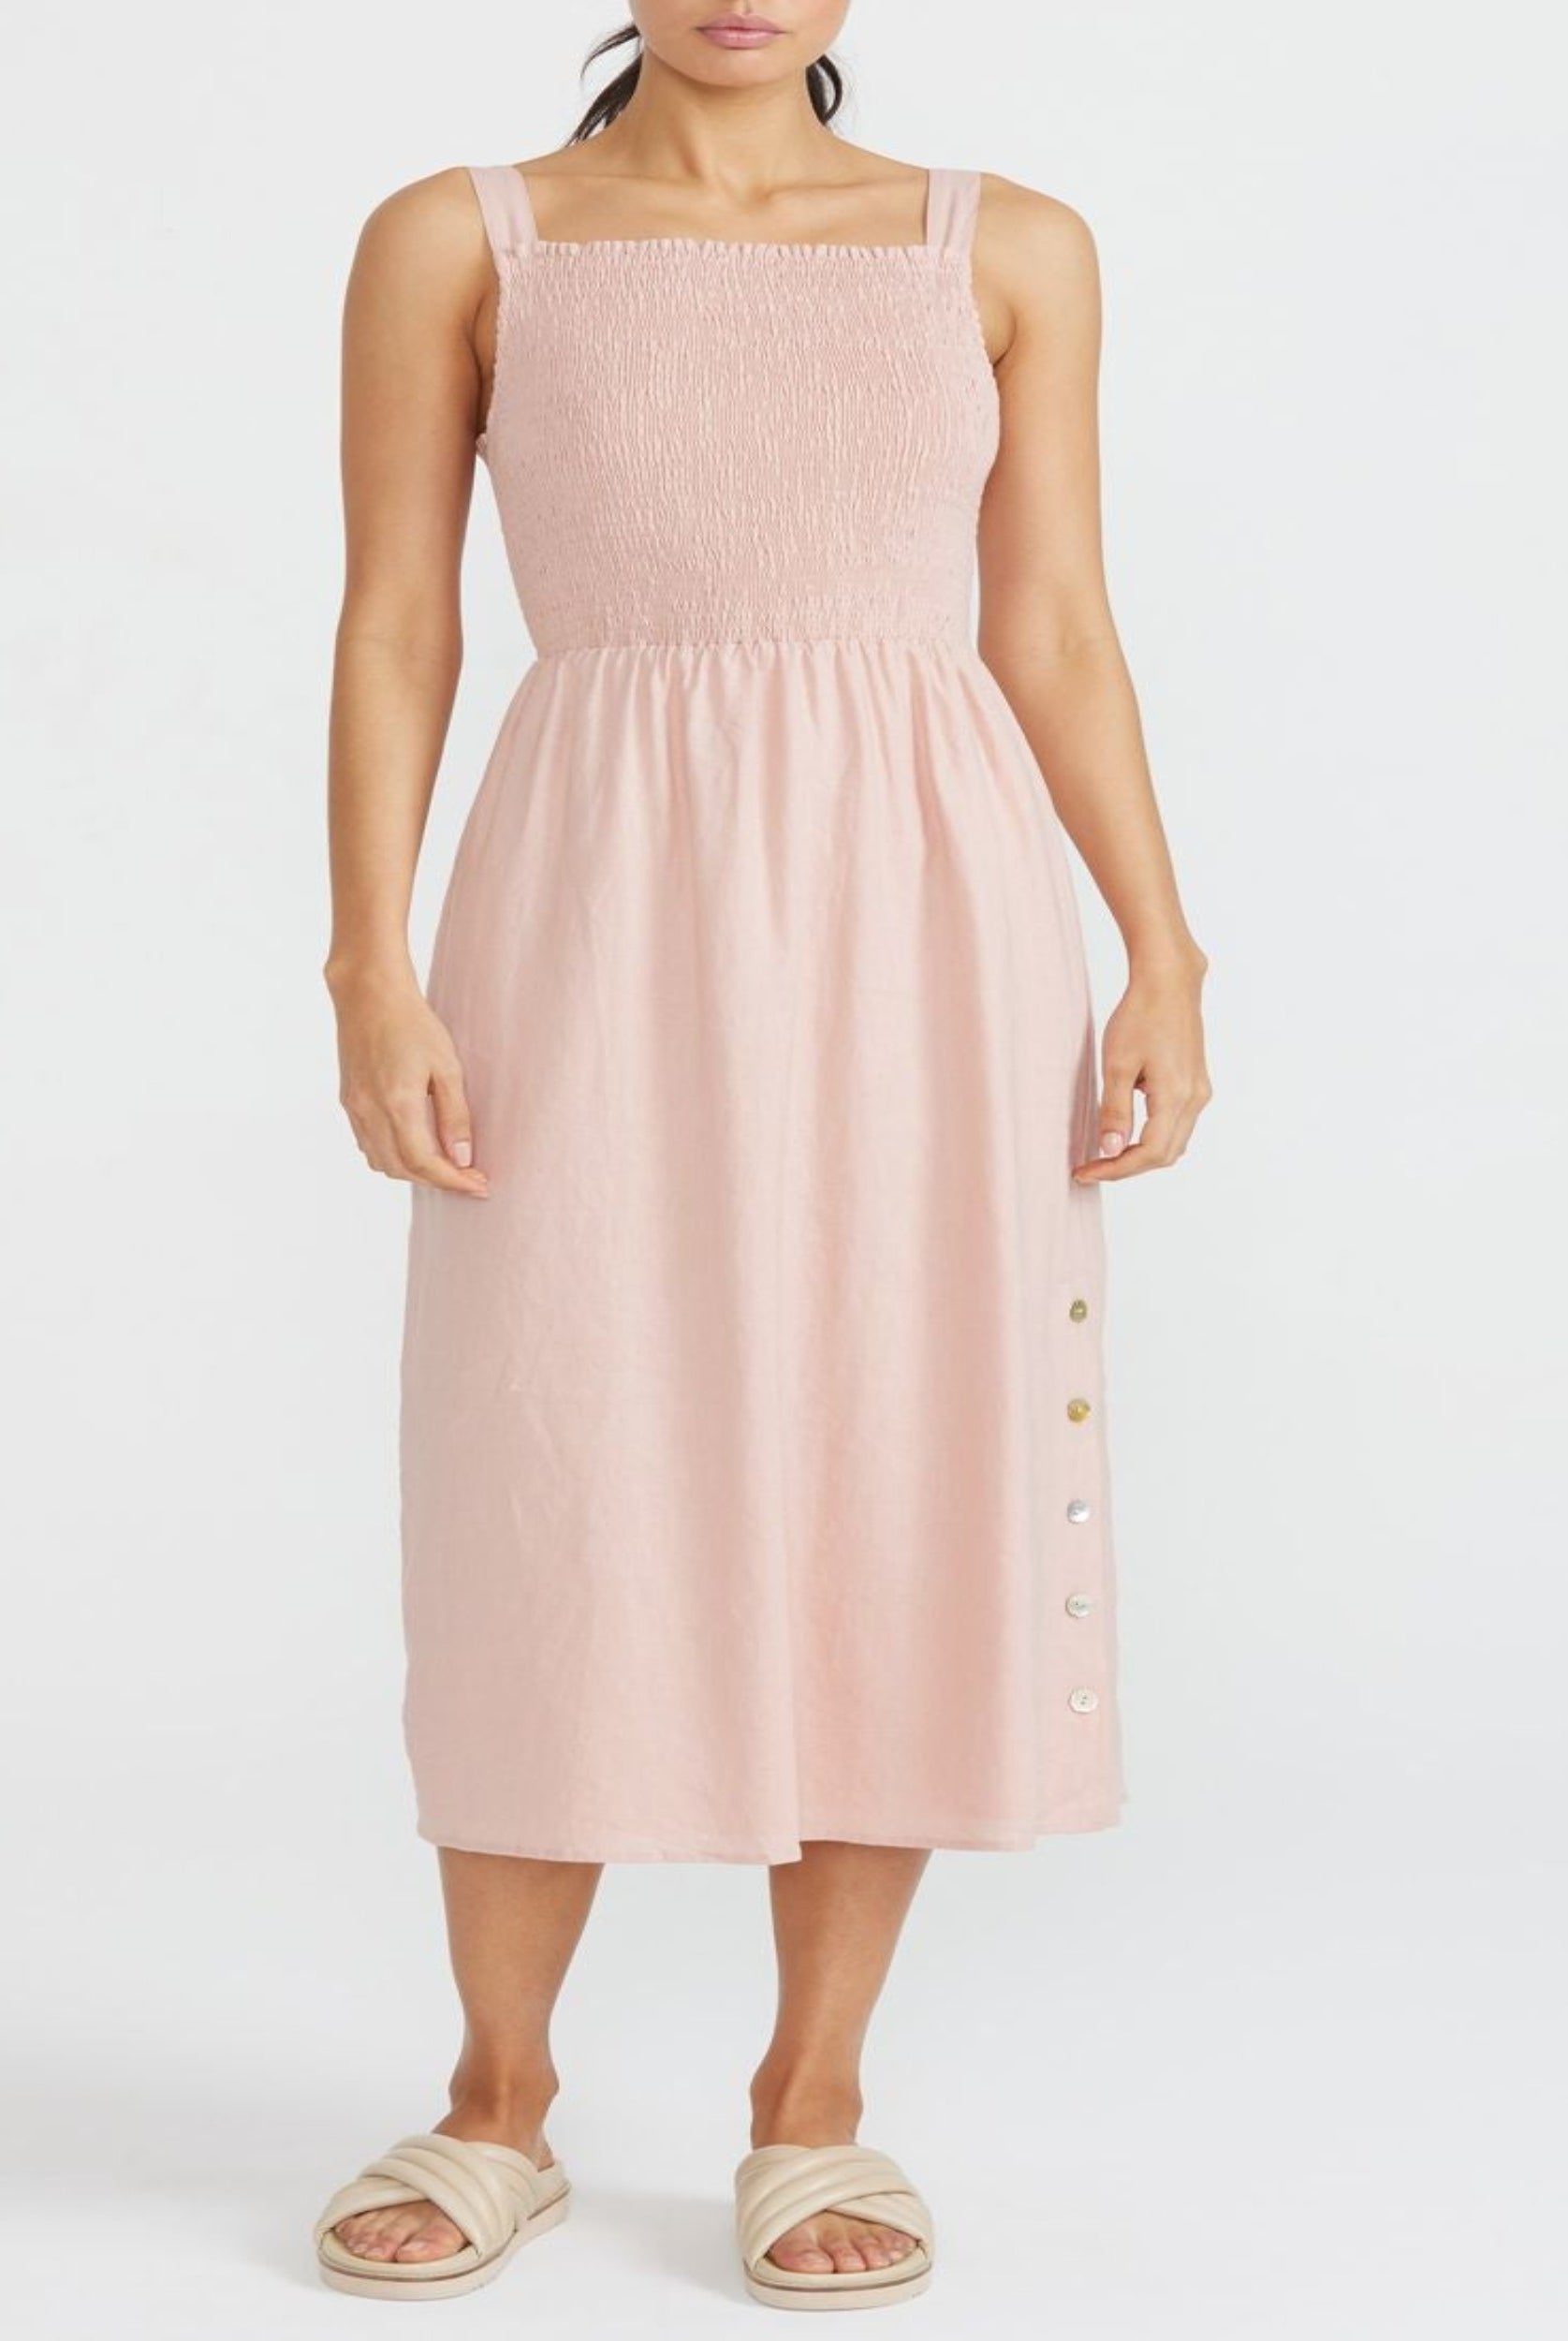 Model wearing pink midi dress